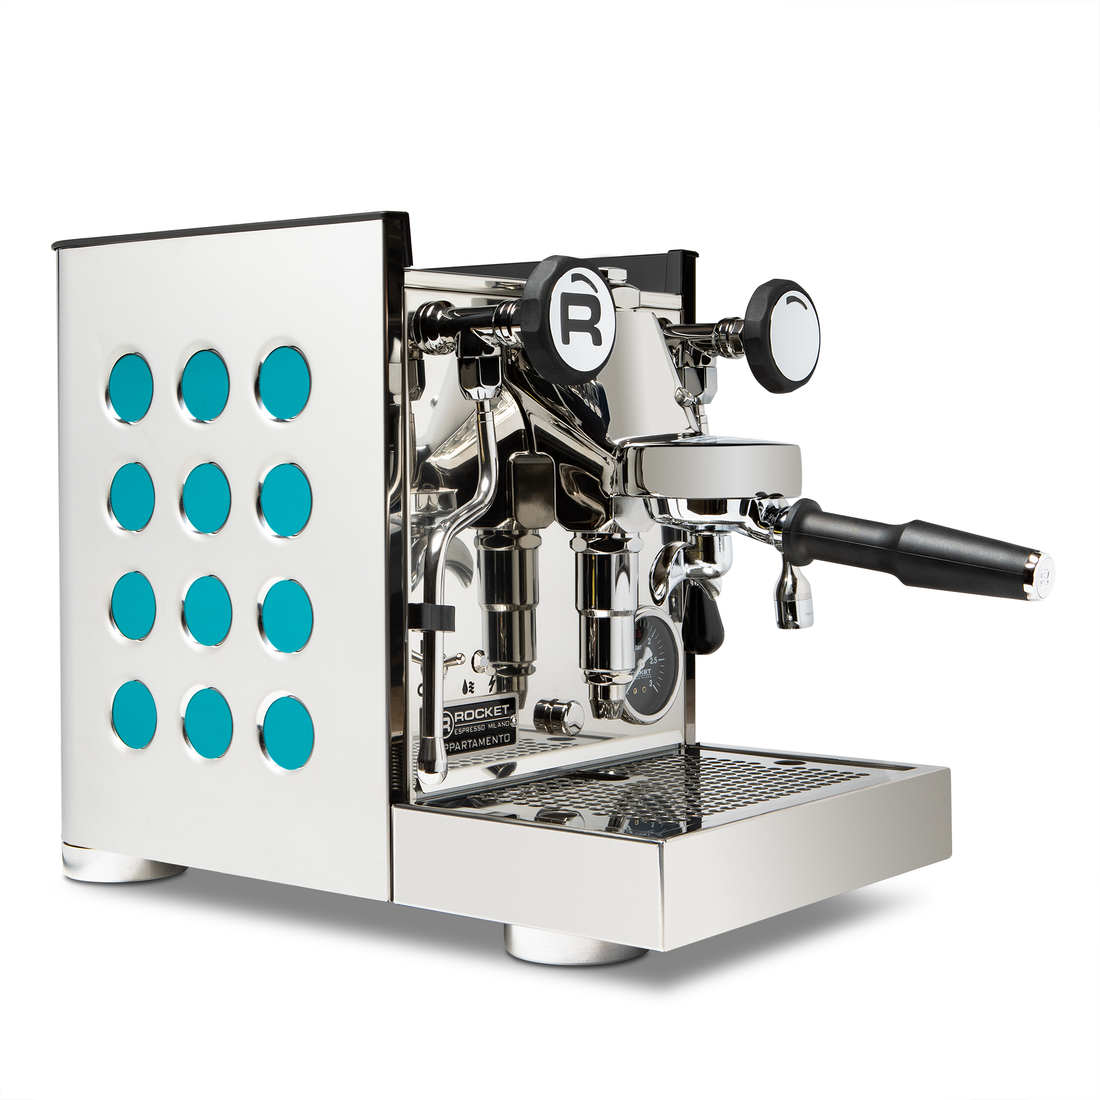 Rocket Espresso Appartamento TCA Espresso Machine - Aquamarine